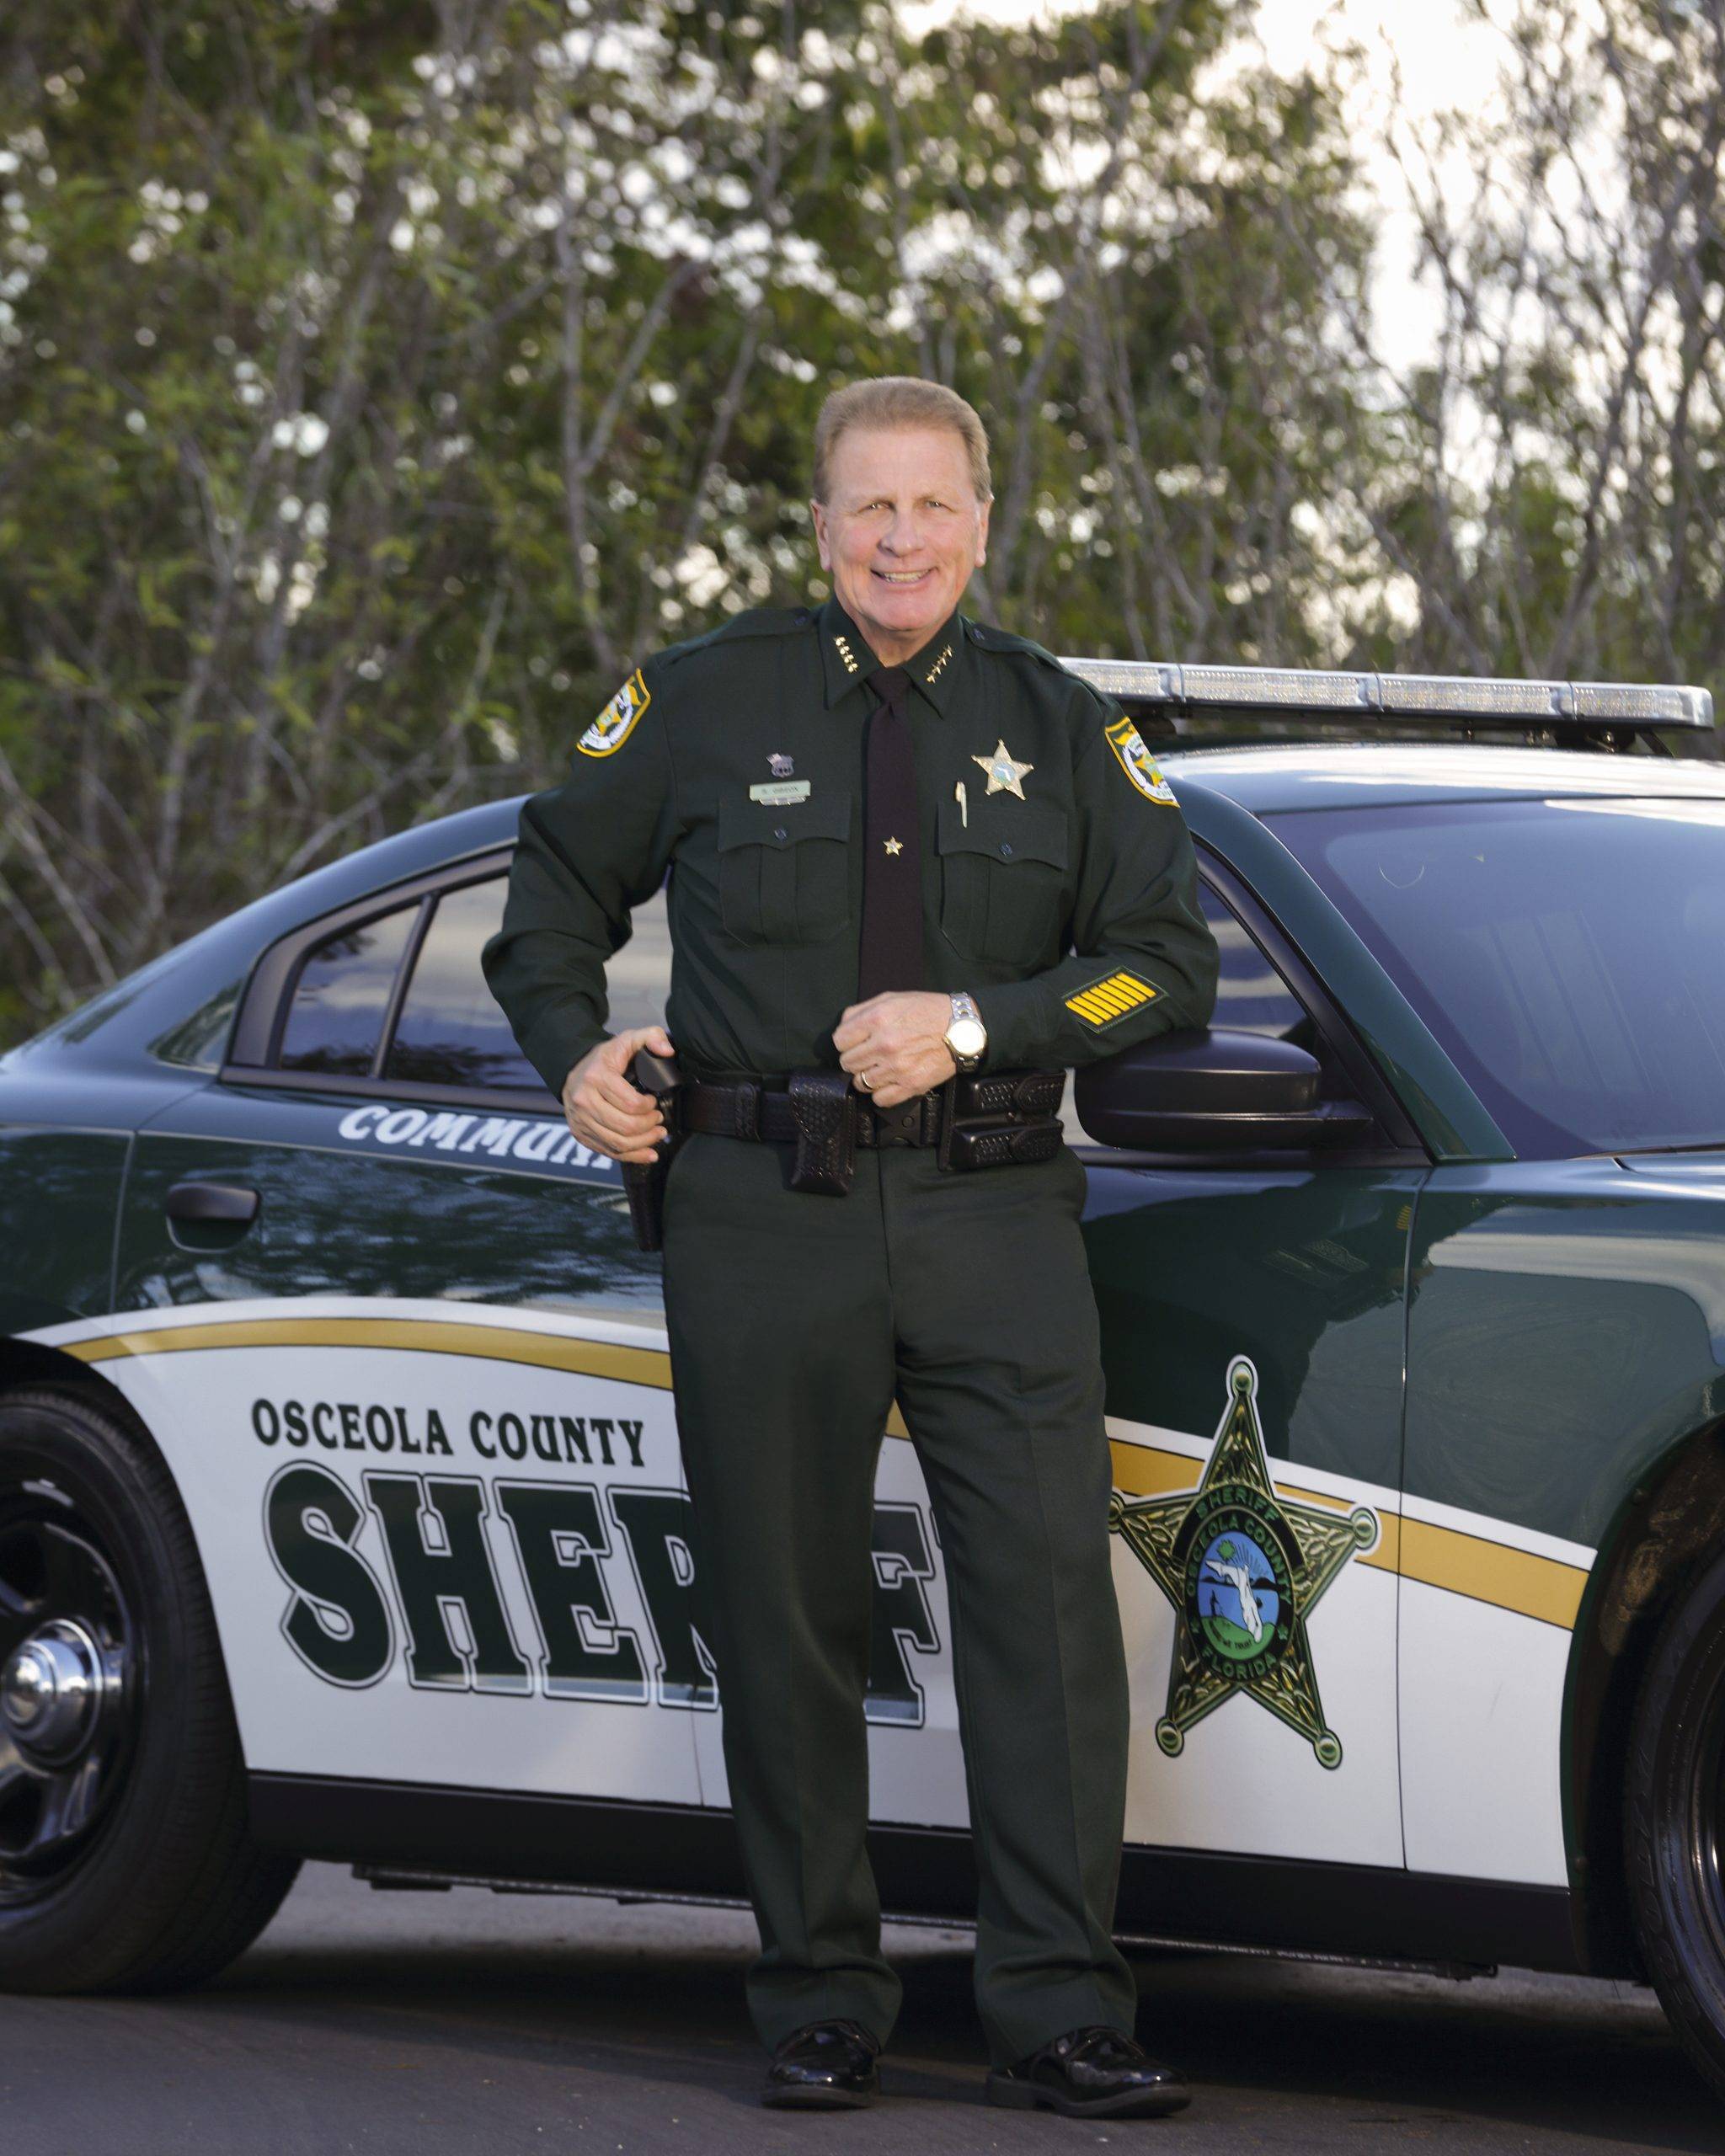 Sheriff Gibson next to patrol car